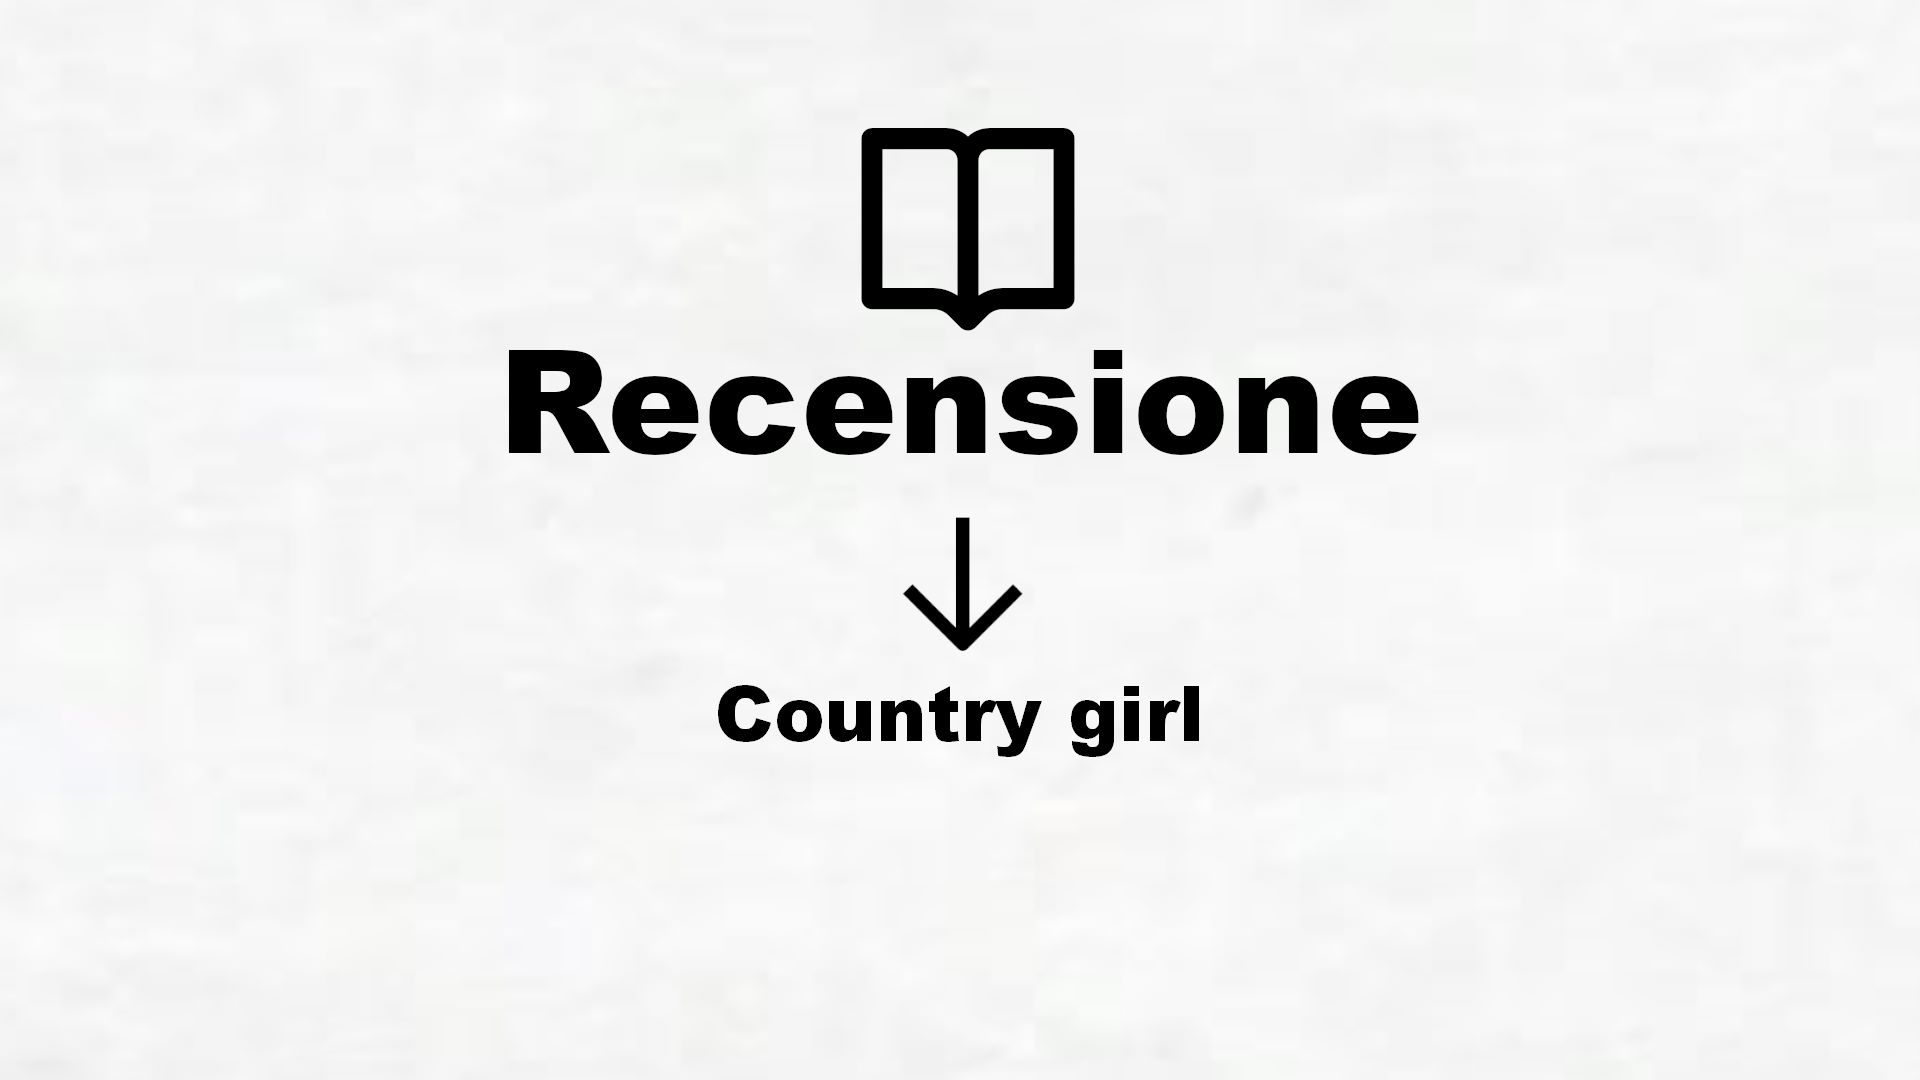 Country girl – Recensione Libro